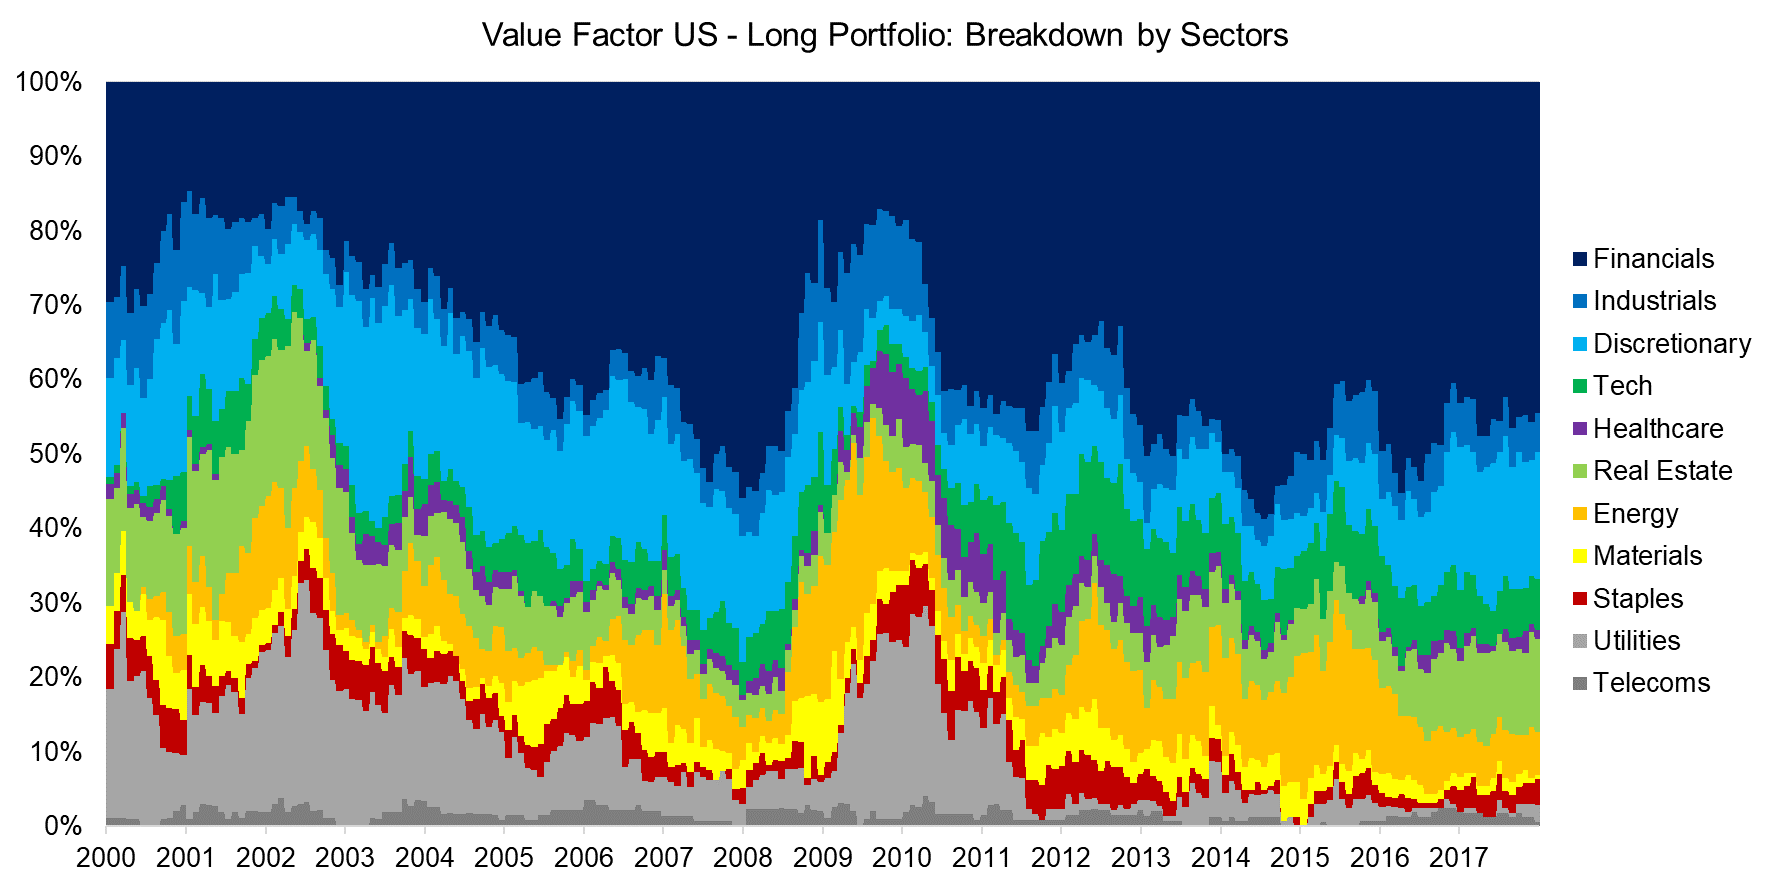 Value Factor US - Long Portfolio Breakdown by Sectors